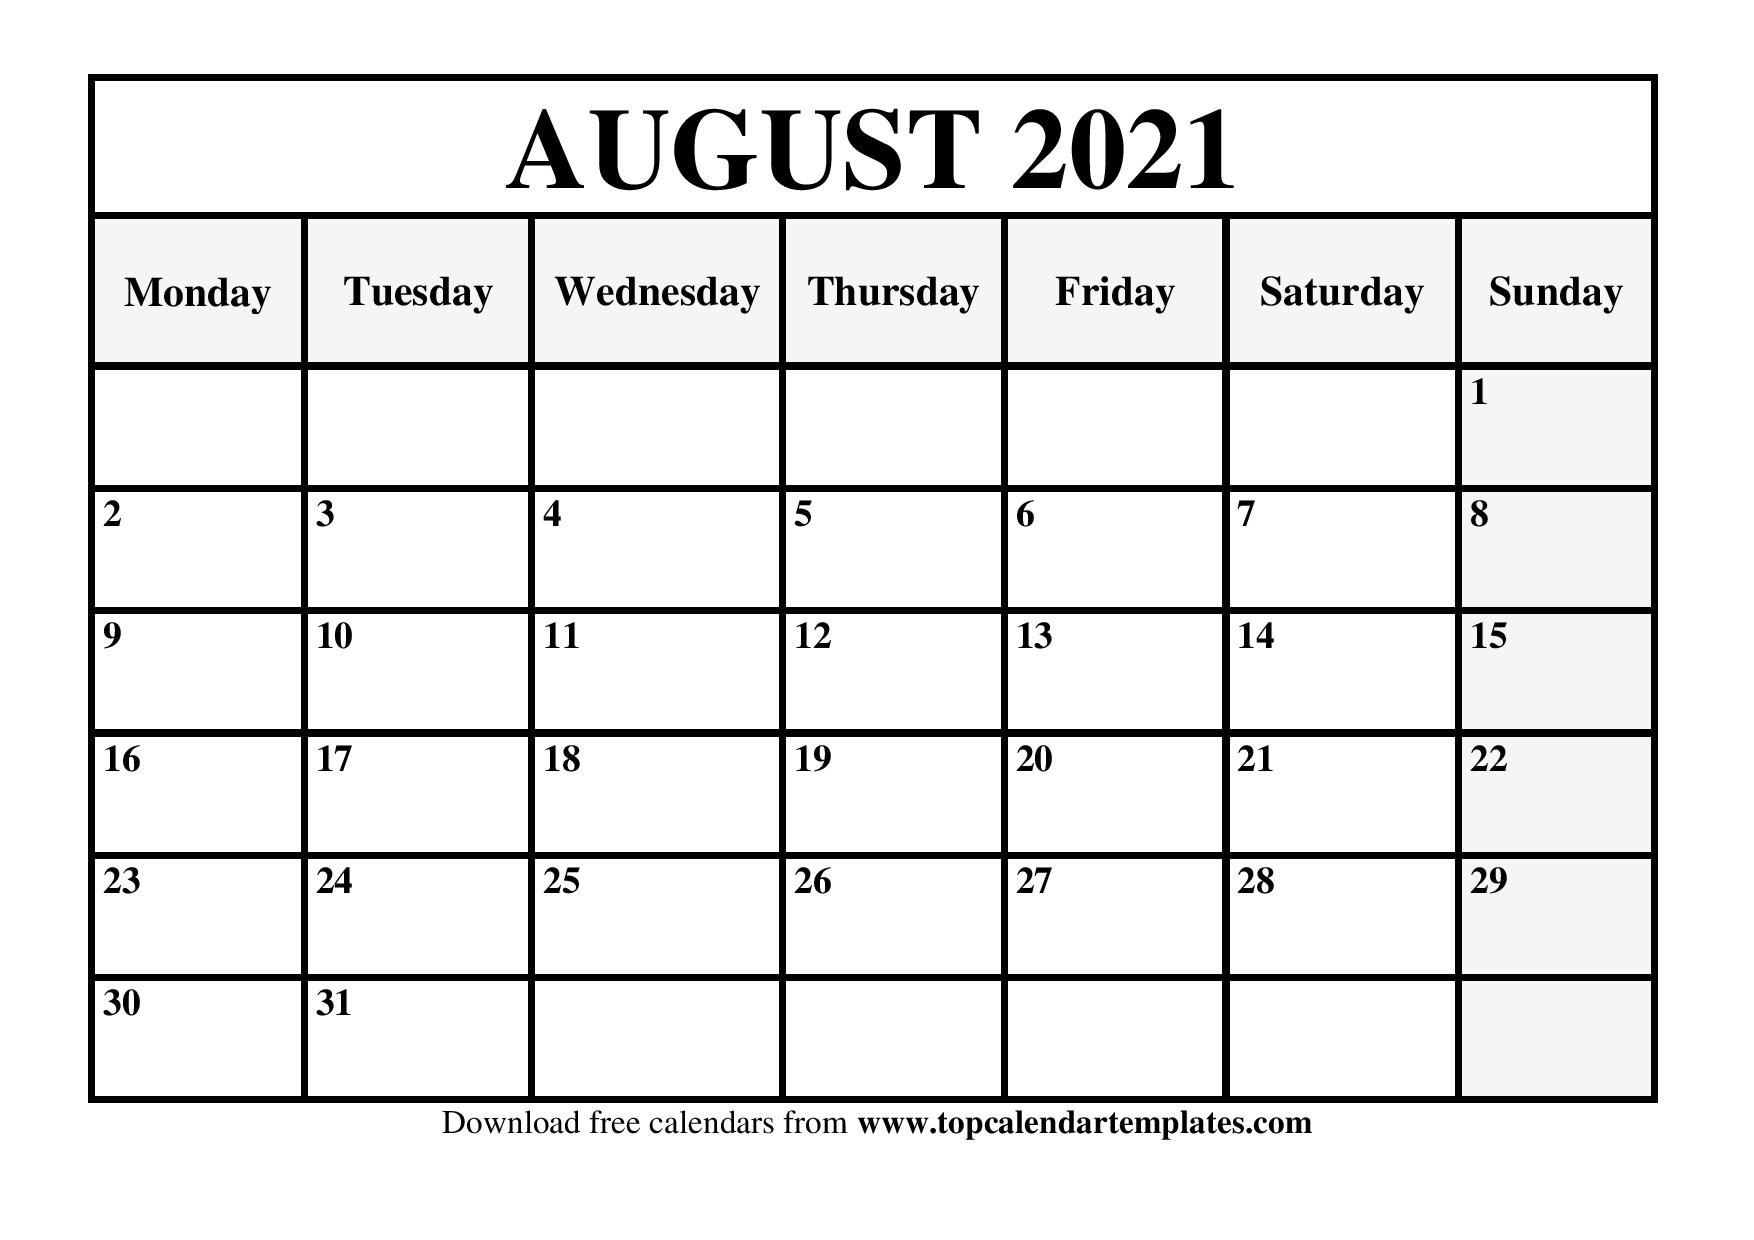 August 2021 Printable Calendar - Monthly Templates-Calendar Month 2021